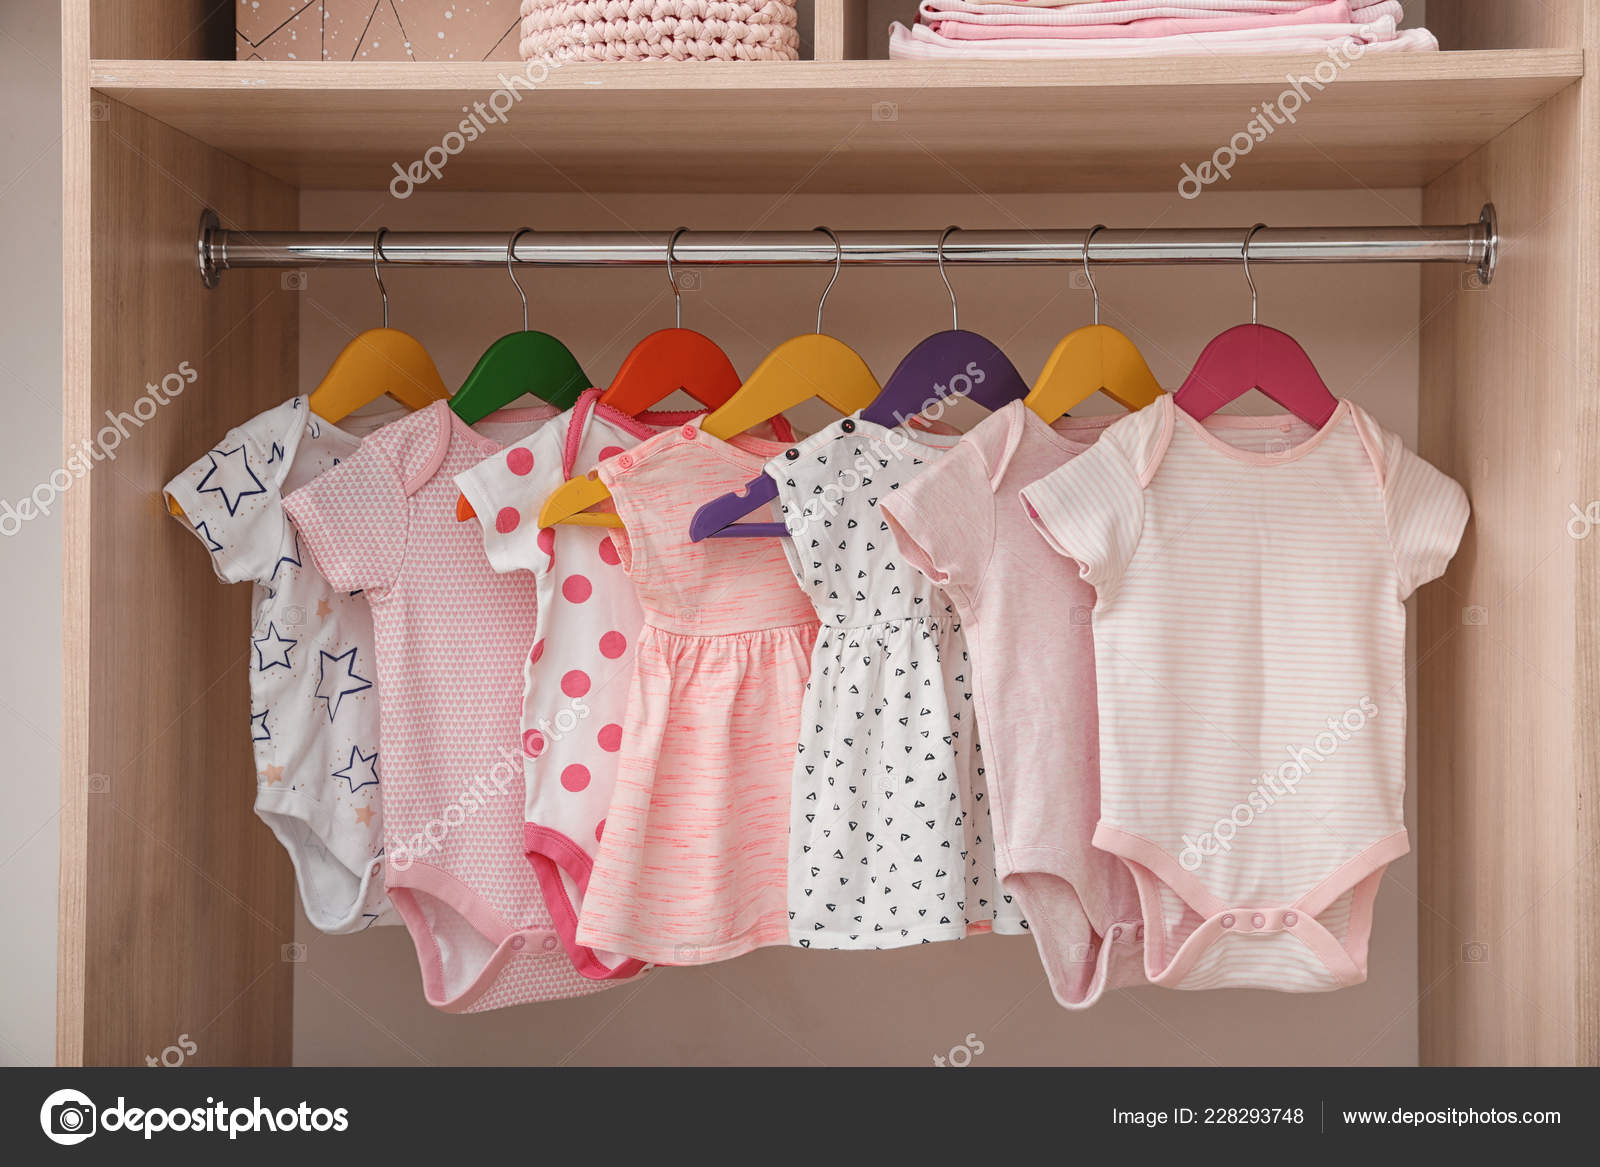 https://st4.depositphotos.com/16122460/22829/i/1600/depositphotos_228293748-stock-photo-hangers-baby-clothes-rack-wardrobe.jpg